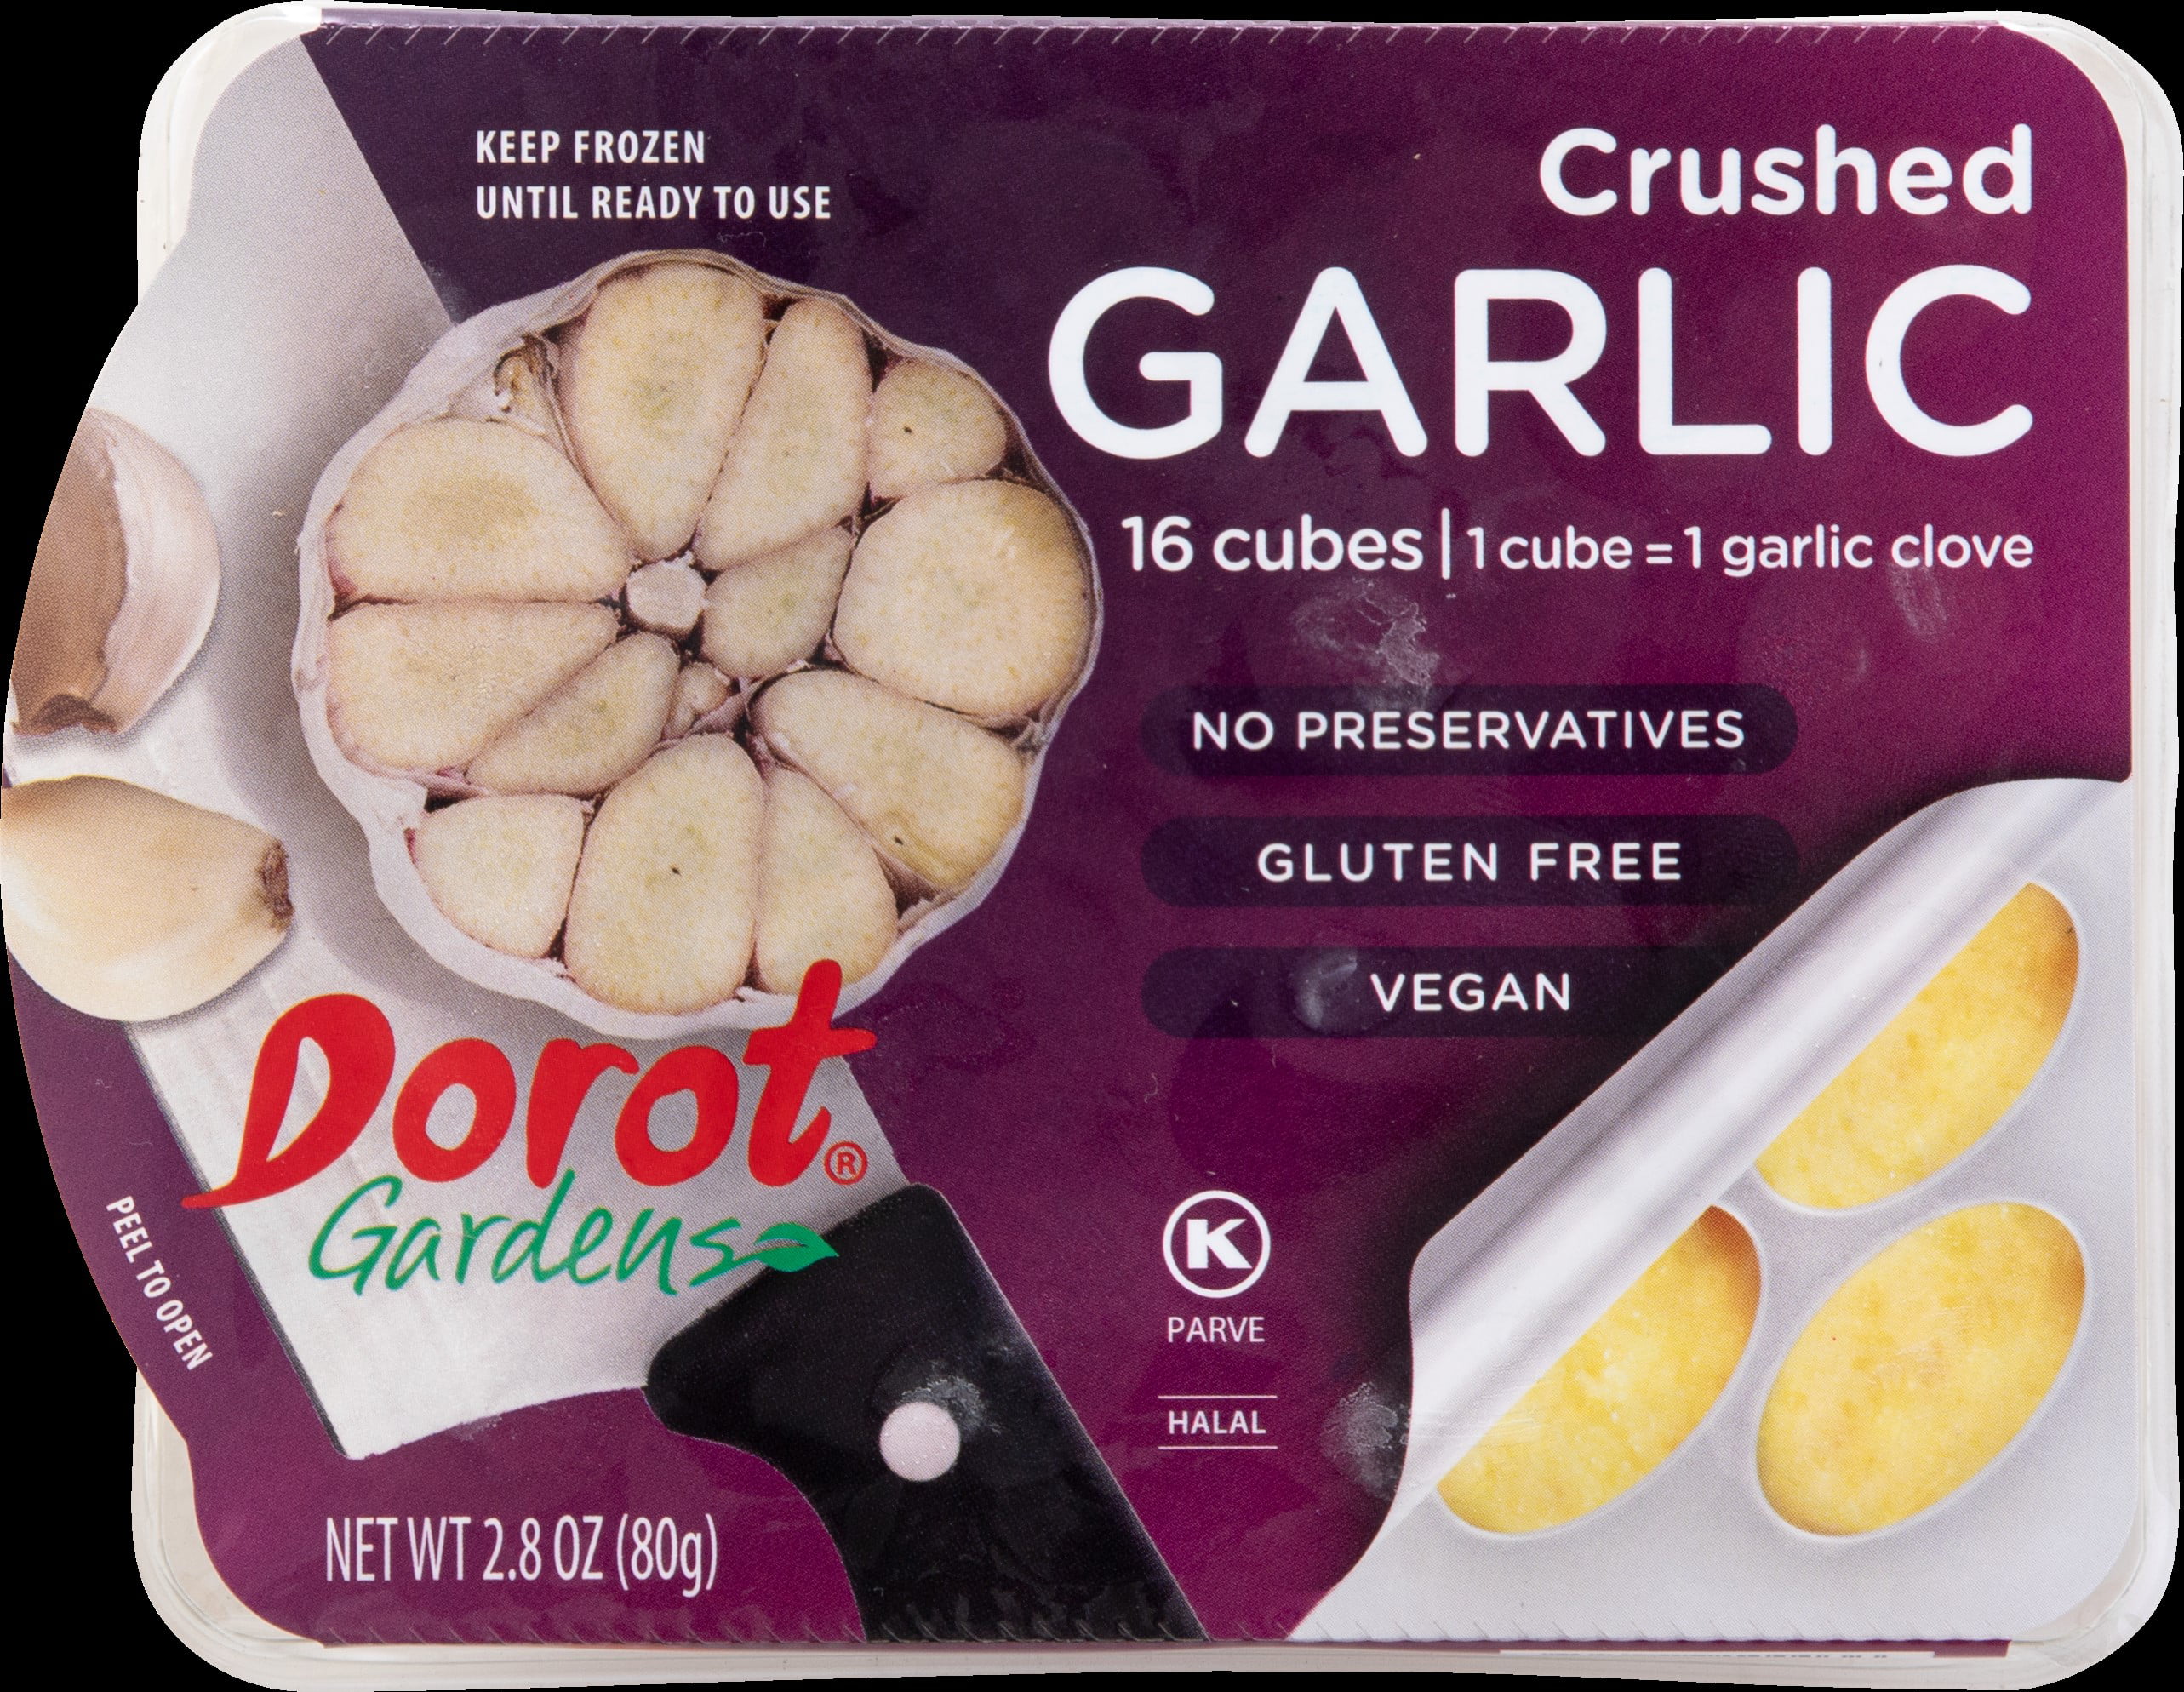 Product Crushed garlic - Dorot Gardens